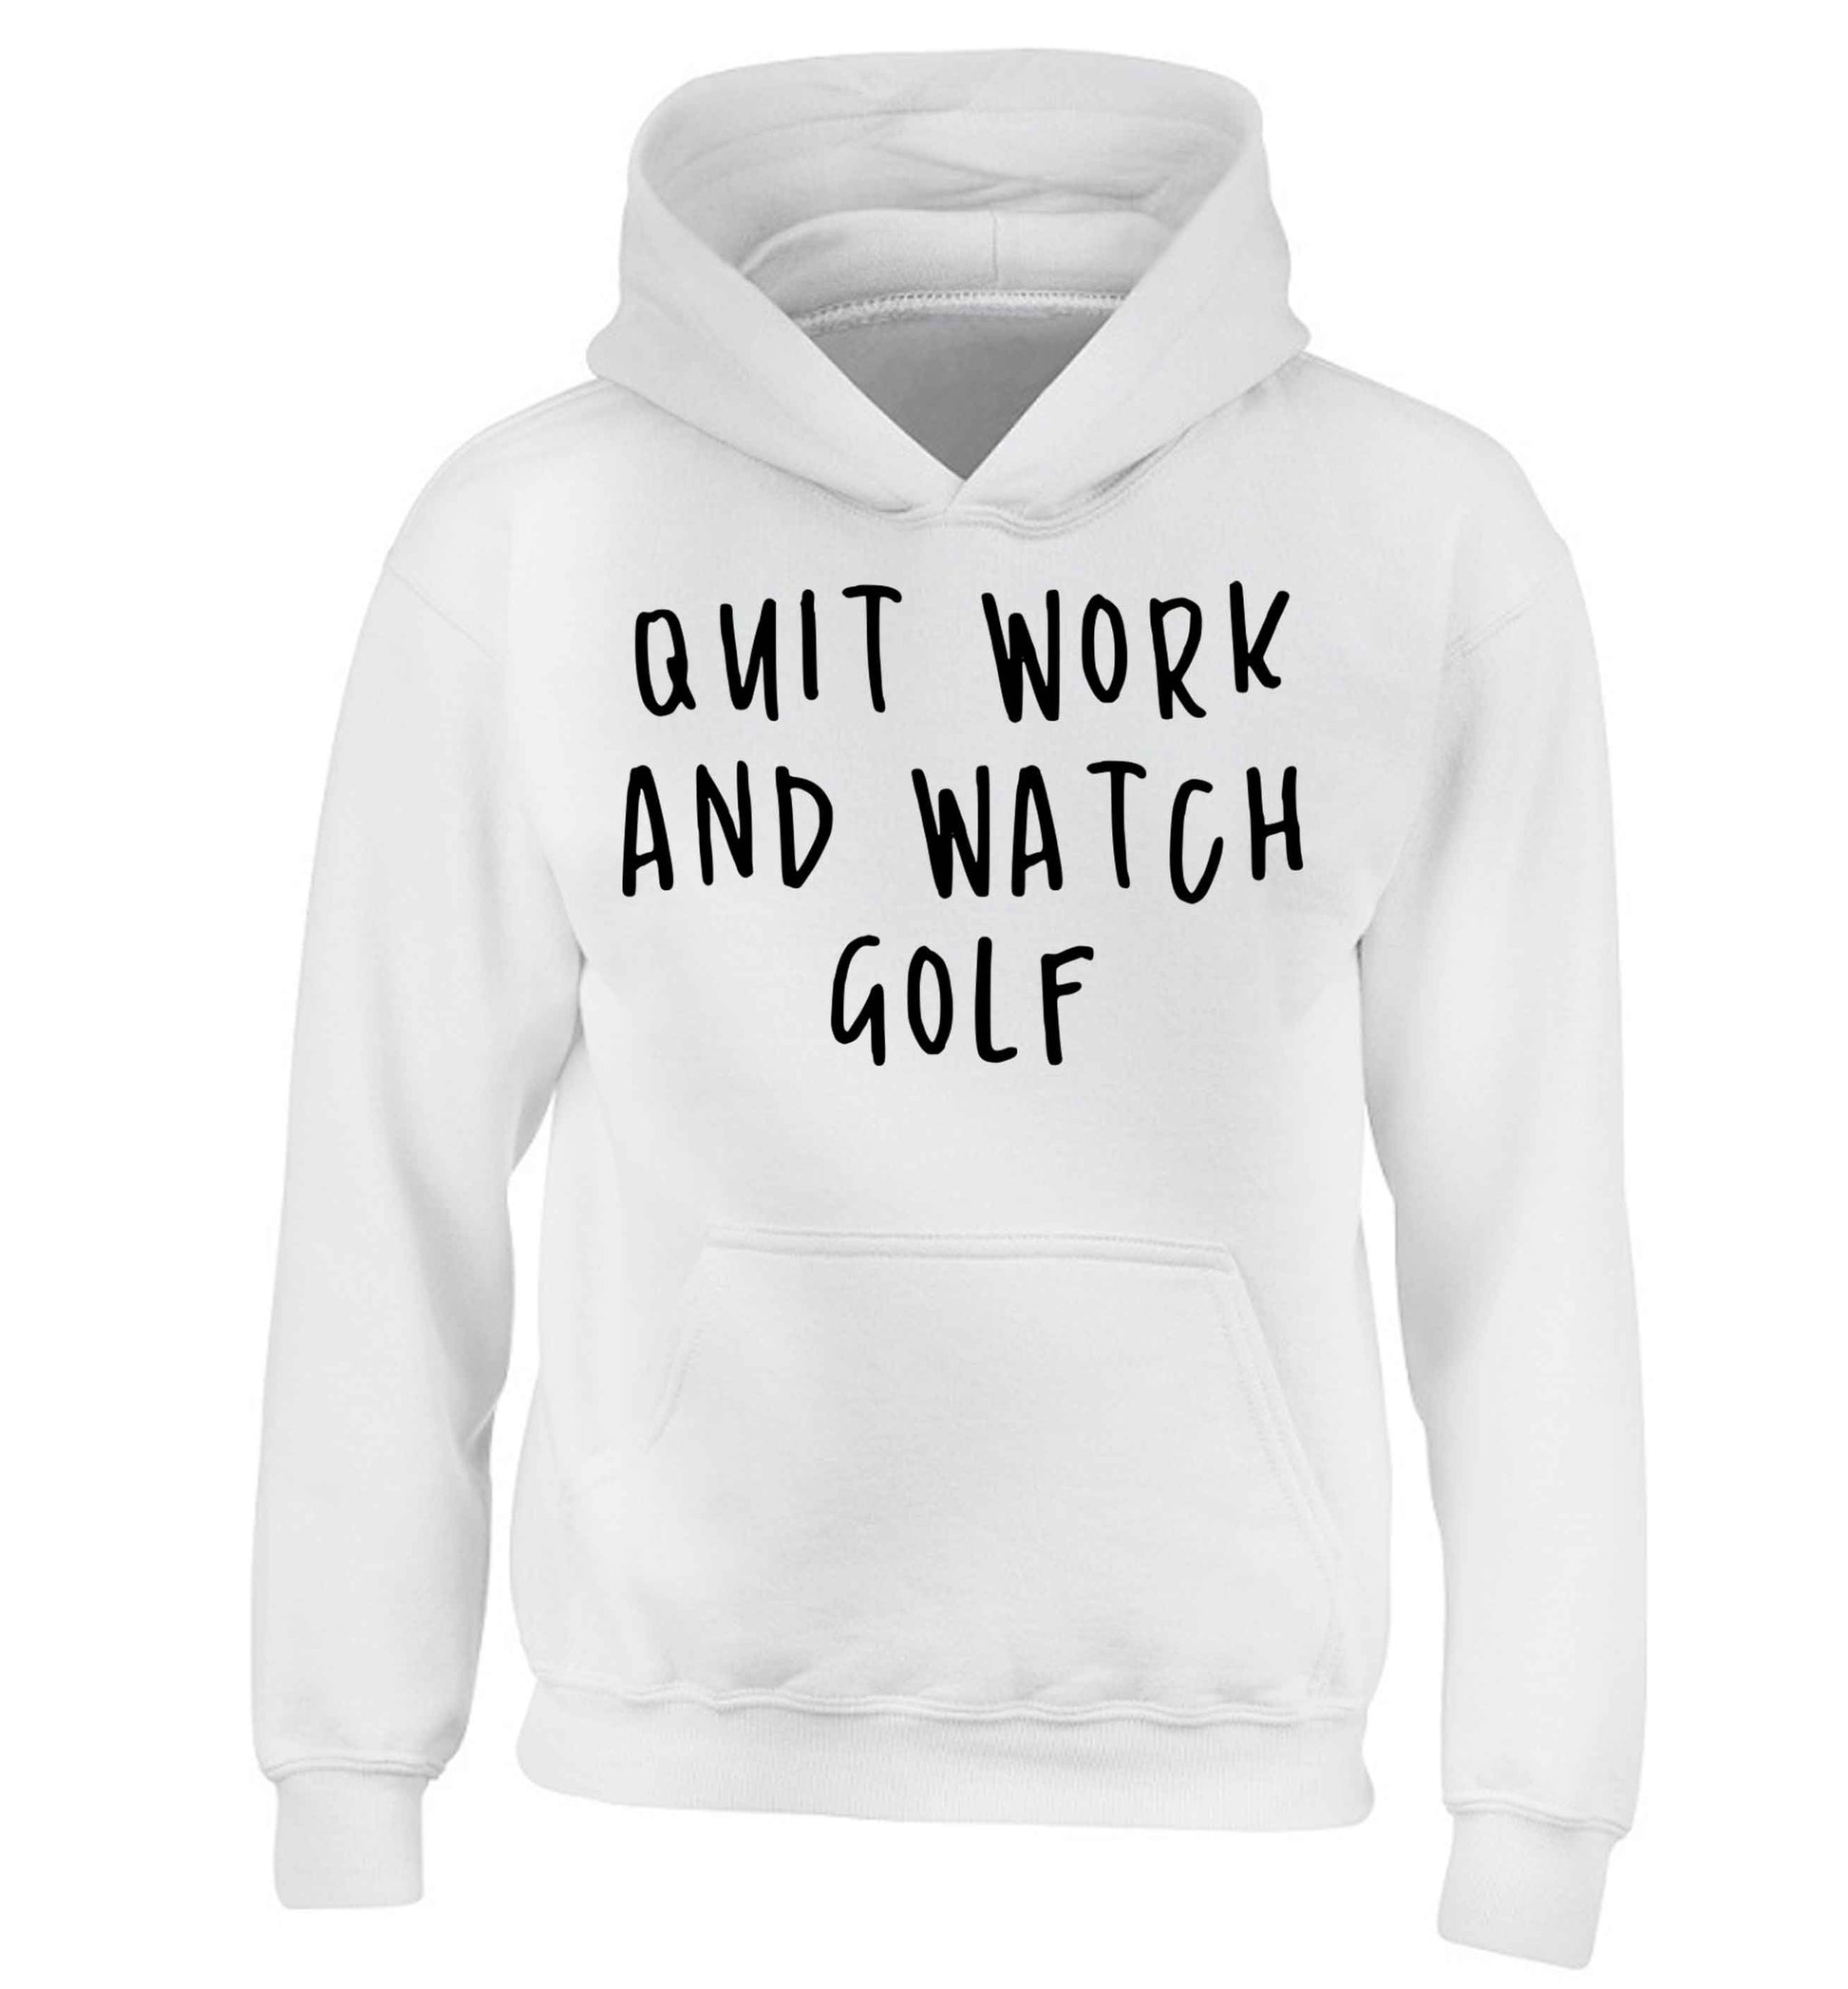 Quit work and watch golf children's white hoodie 12-13 Years